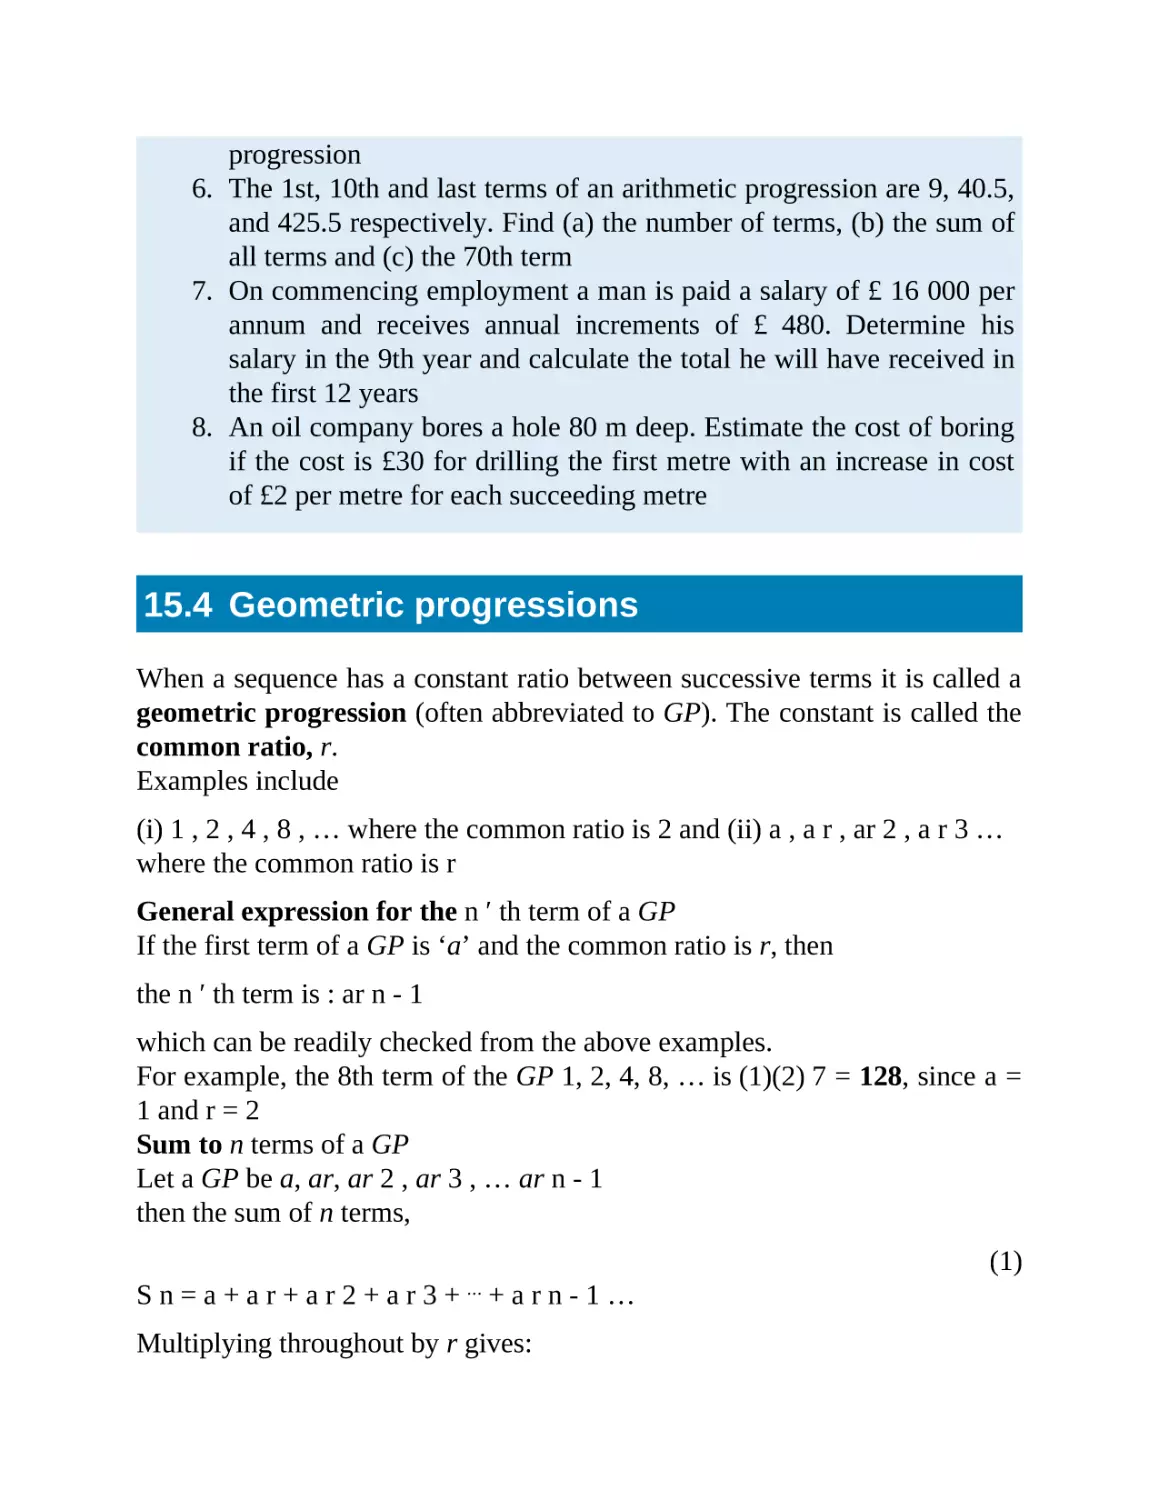 15.4 Geometric progressions